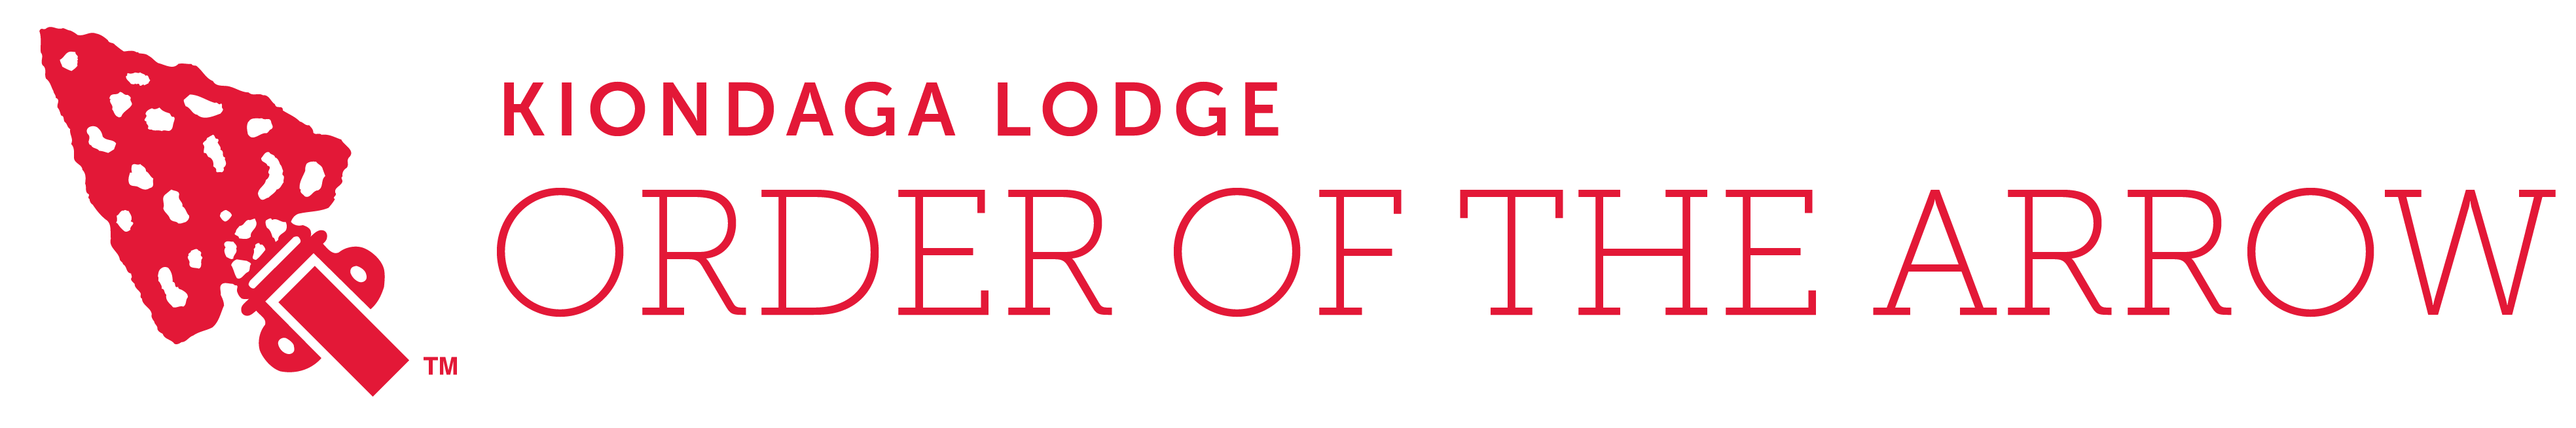 Kiondaga Lodge Trading Post